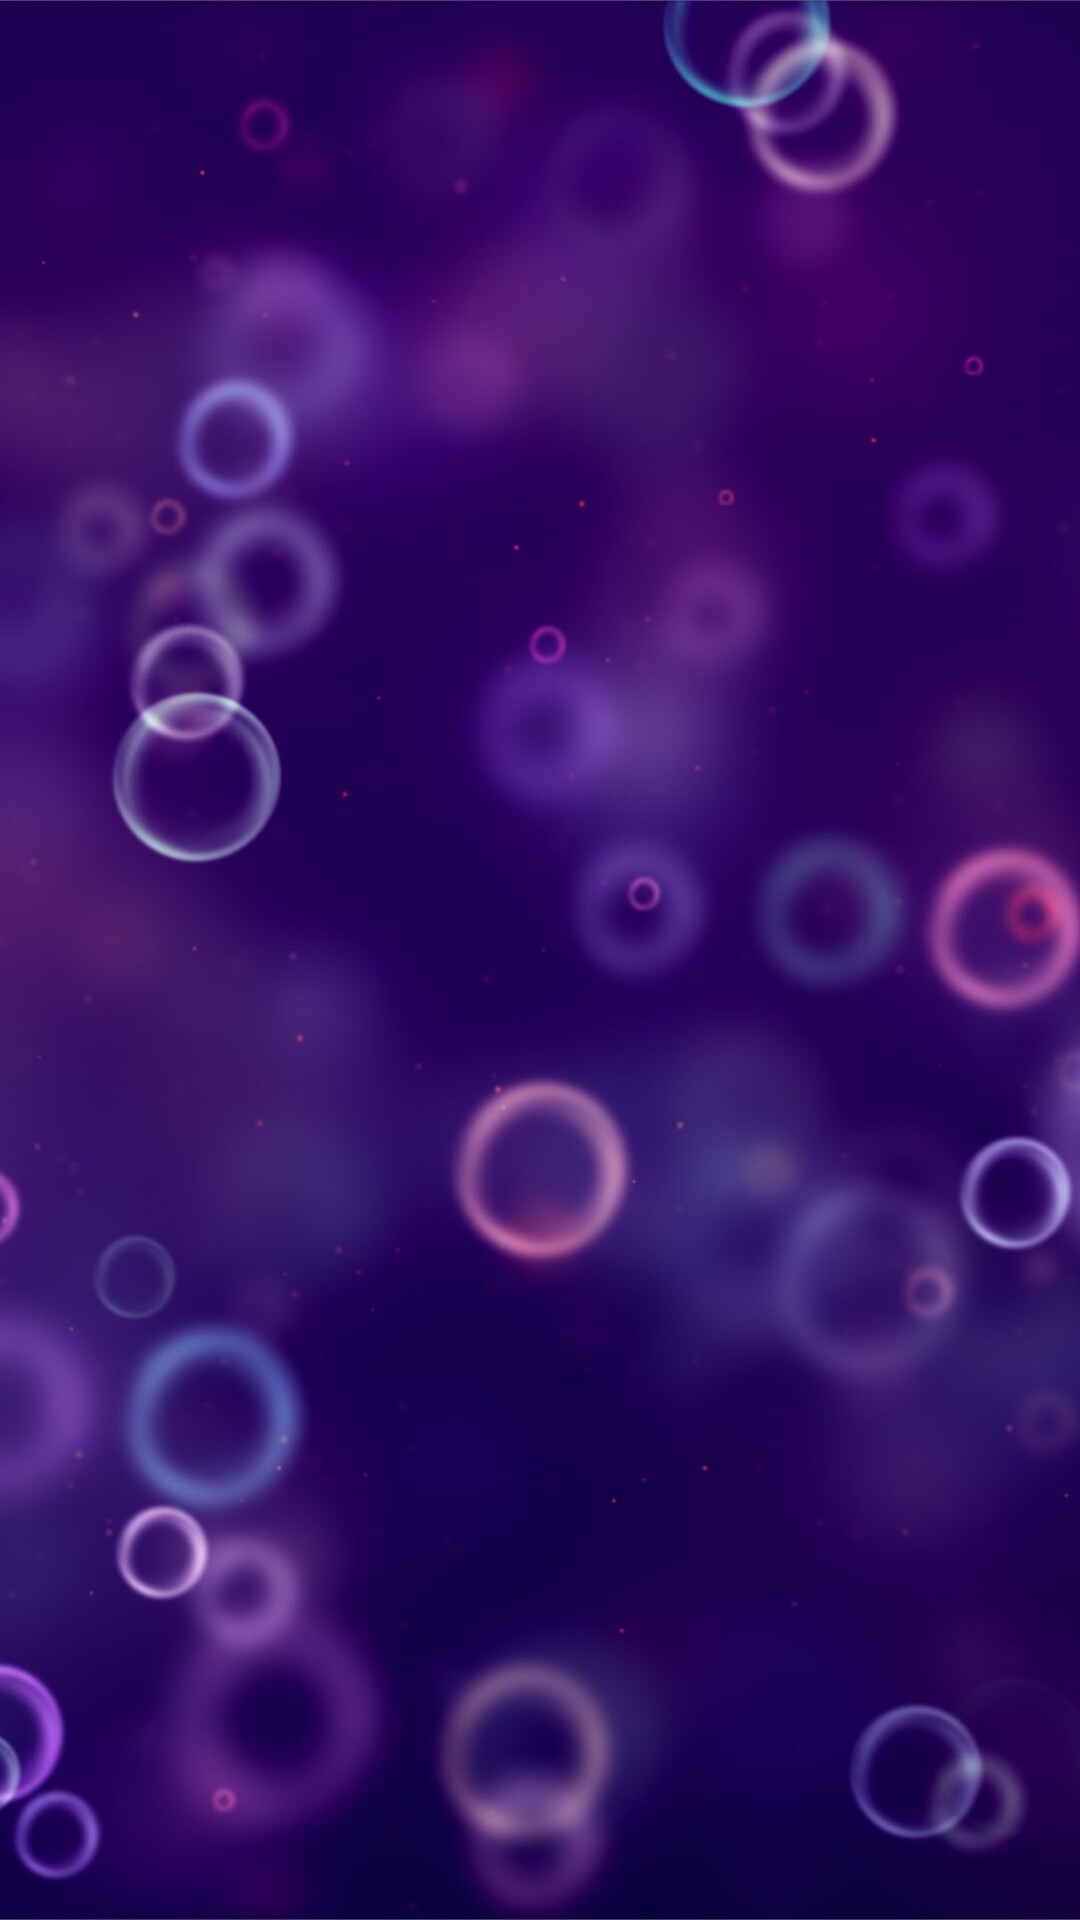 Girly: Dark blue bubbles, Shining purple balls, Violet, Minimalistic. 1080x1920 Full HD Wallpaper.